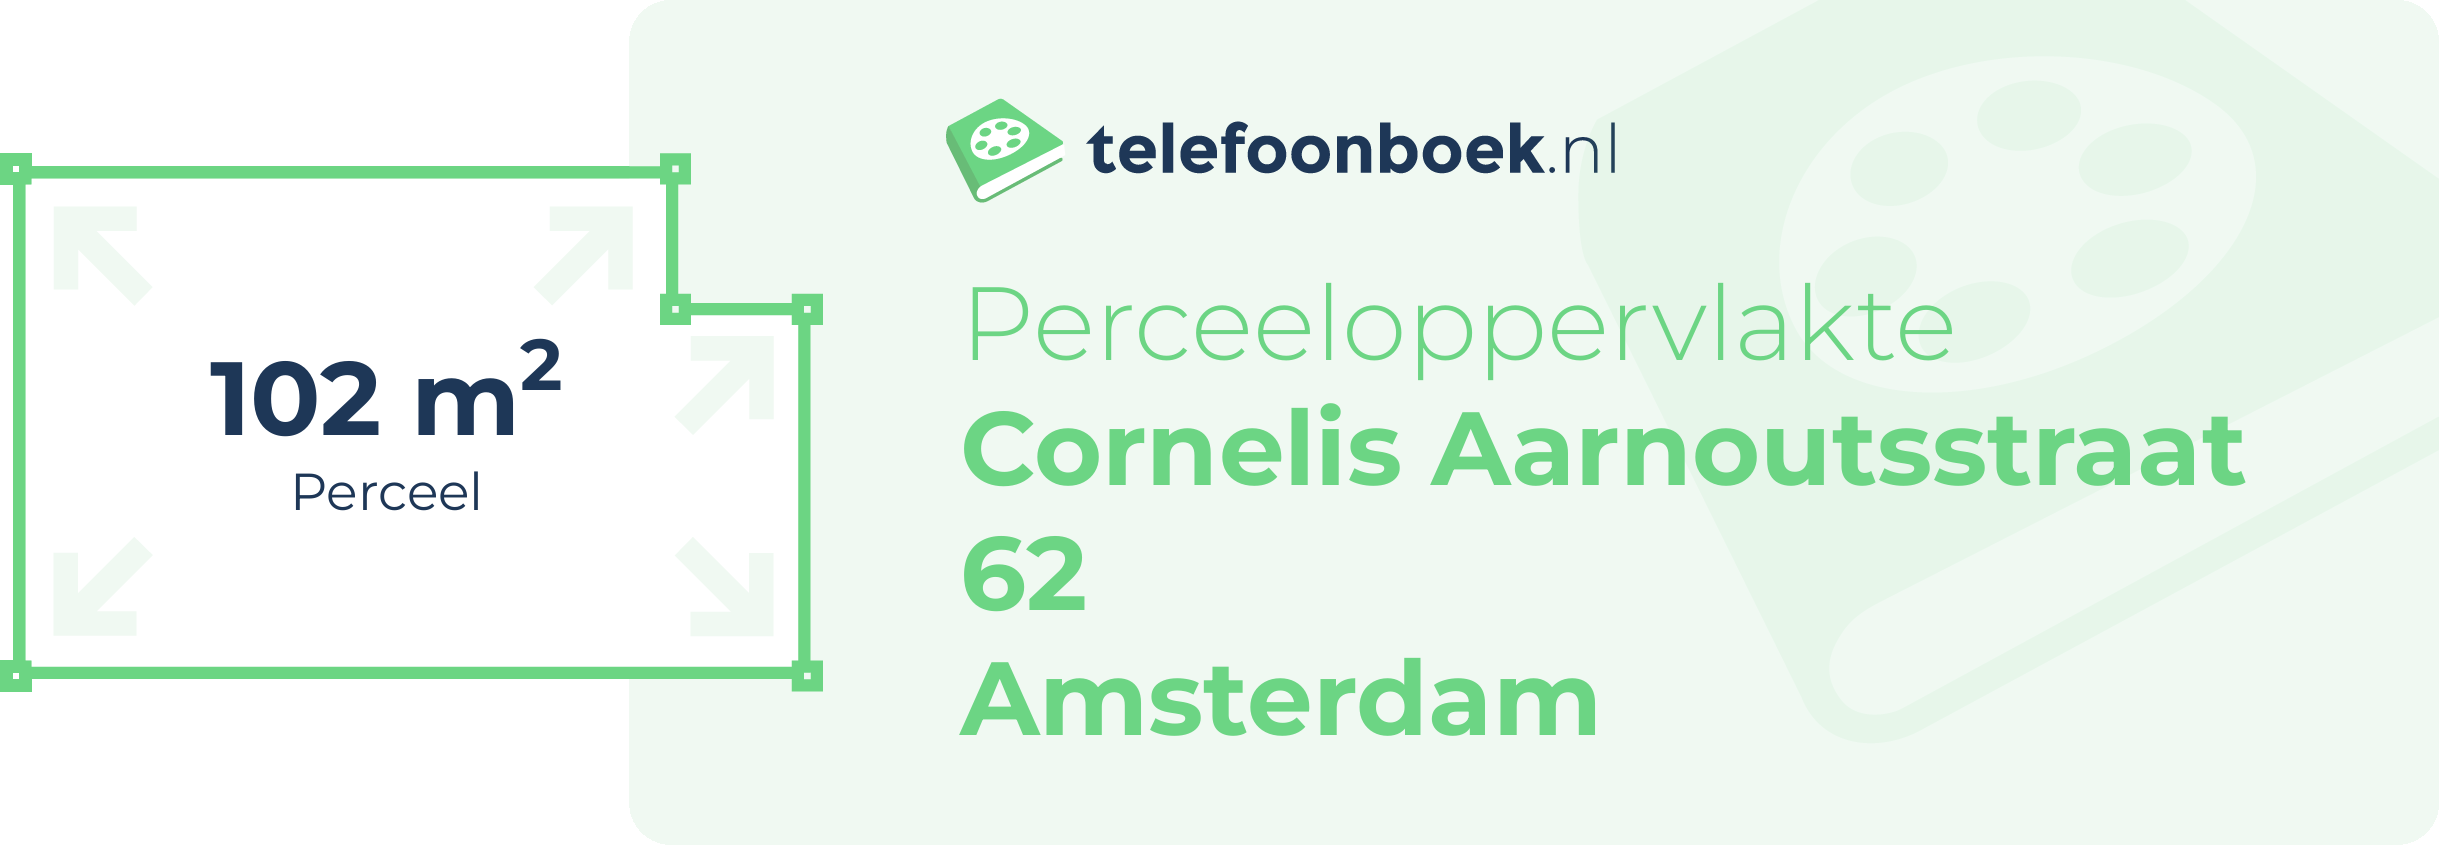 Perceeloppervlakte Cornelis Aarnoutsstraat 62 Amsterdam